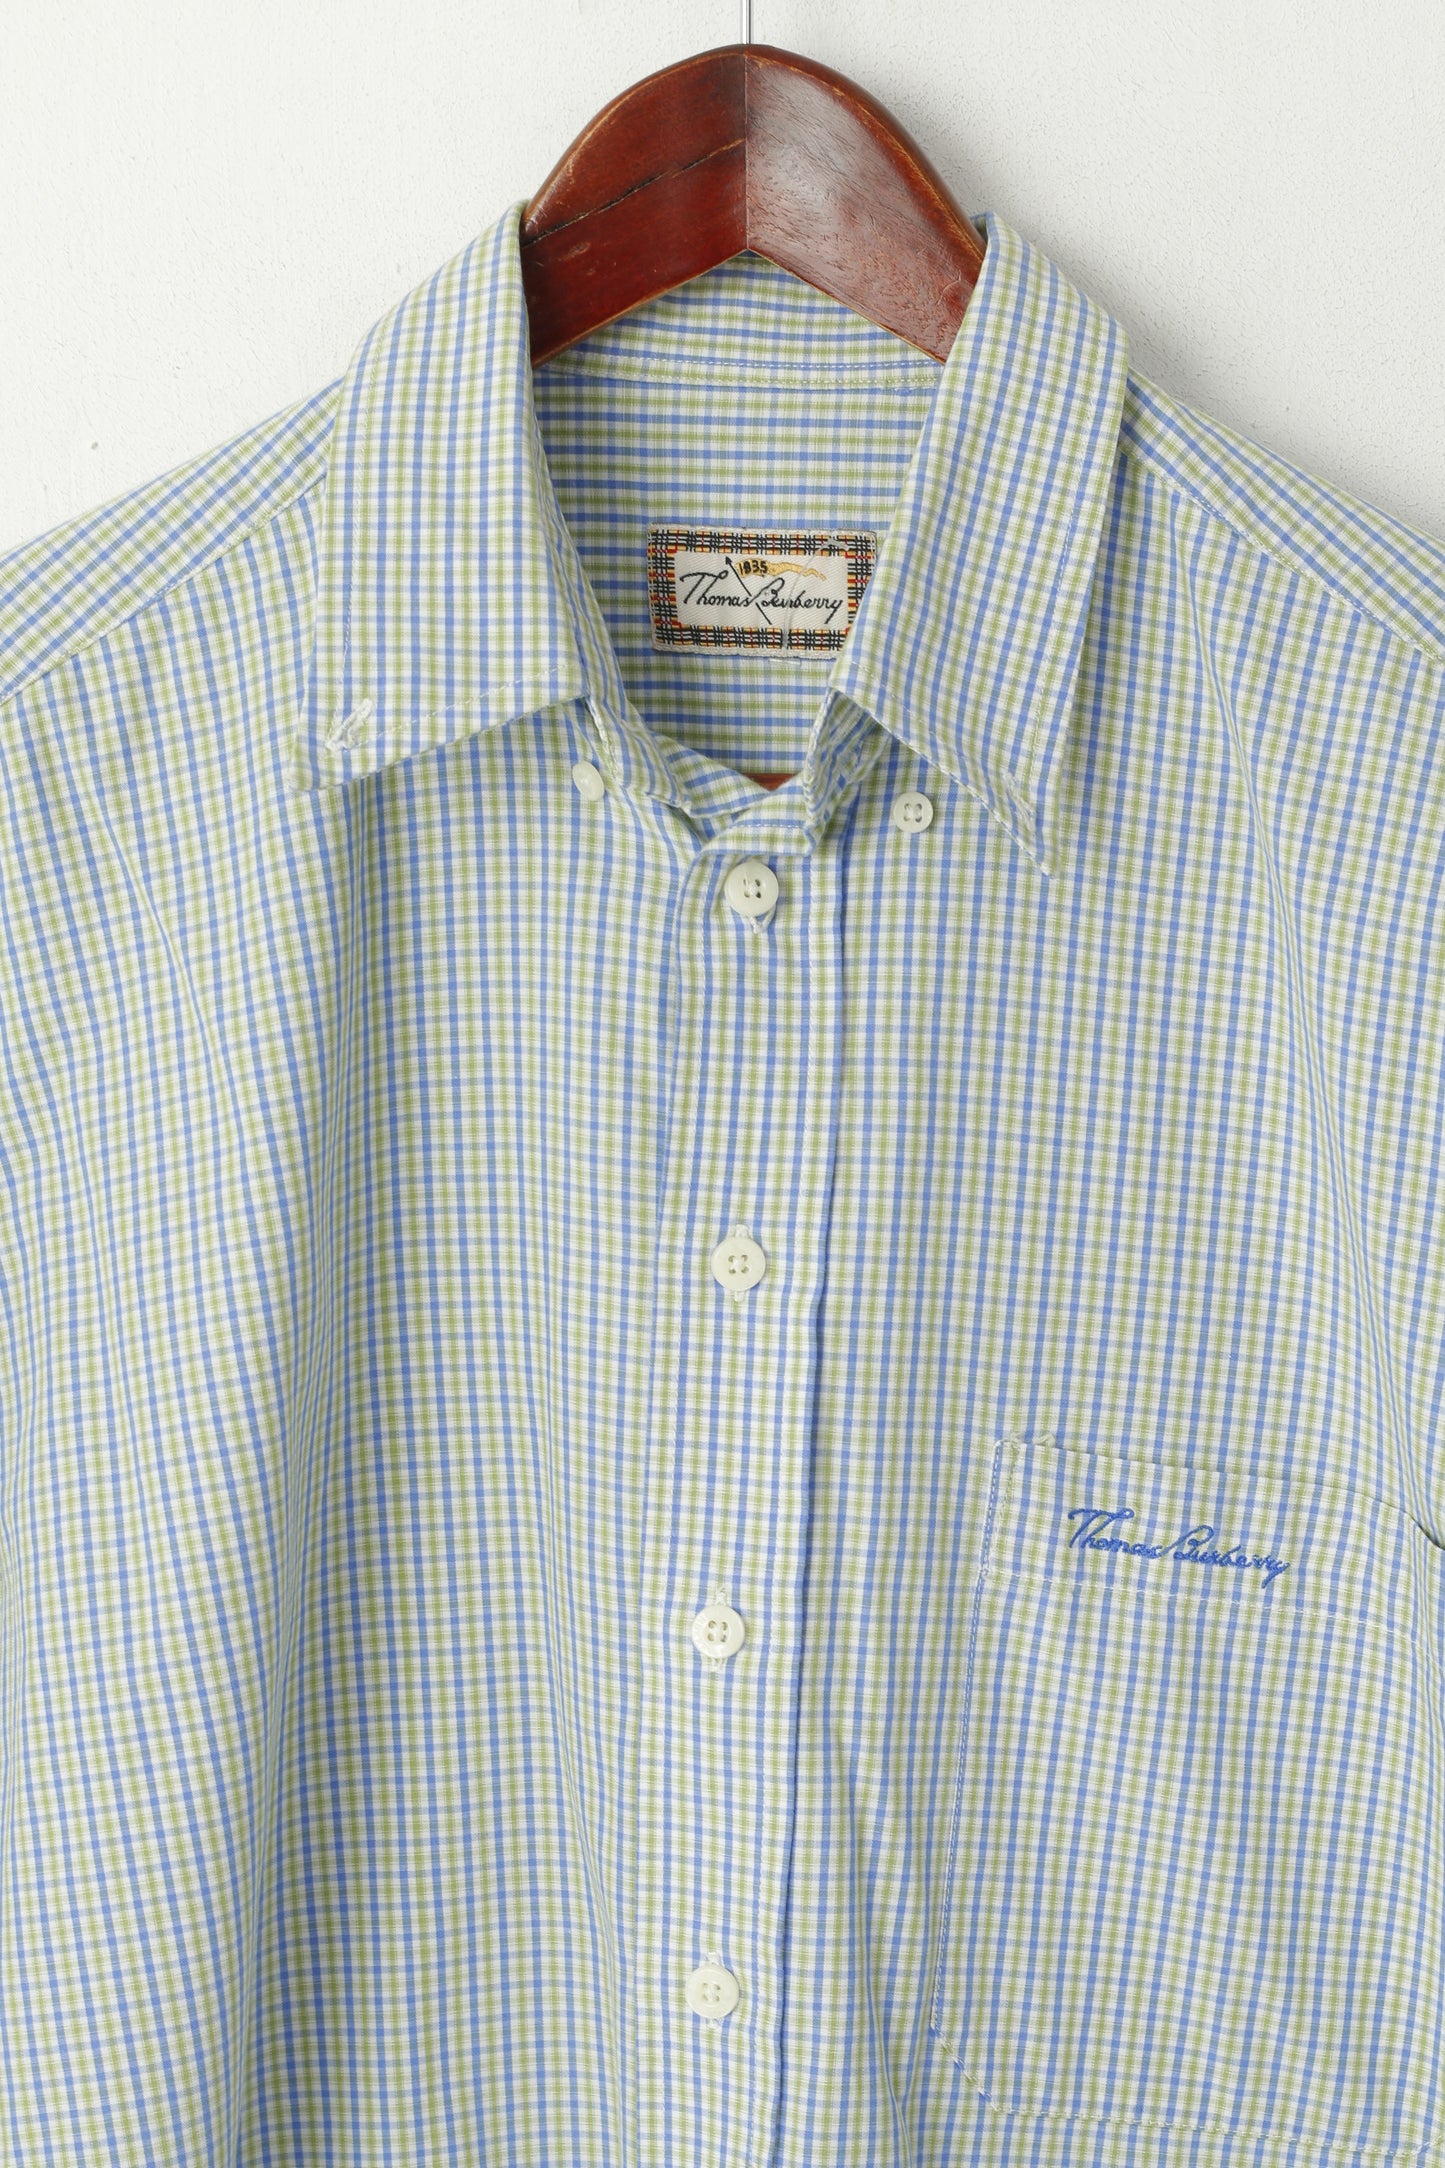 Thomas Burberry Men M Casual Shirt Blue Green Check Cotton Long Sleeve Top